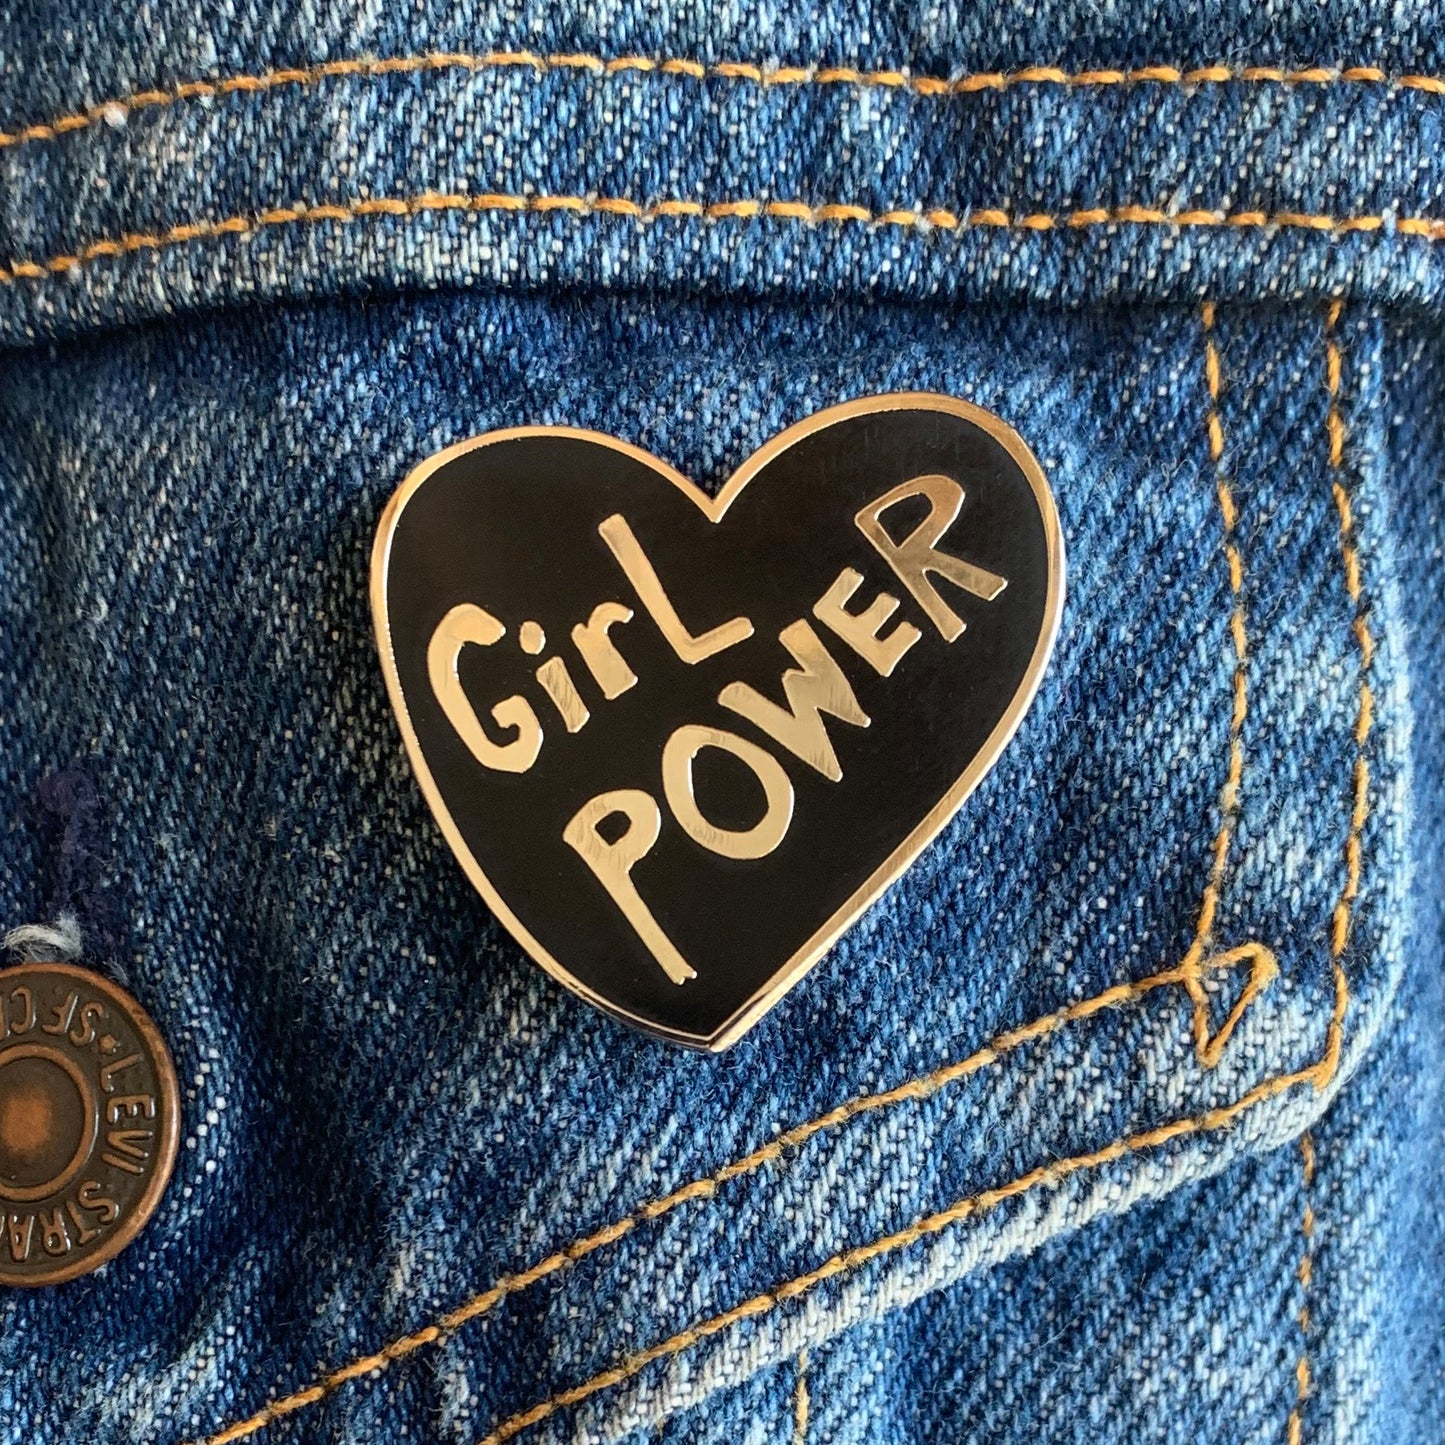 Girl Power Heart Enamel Pin